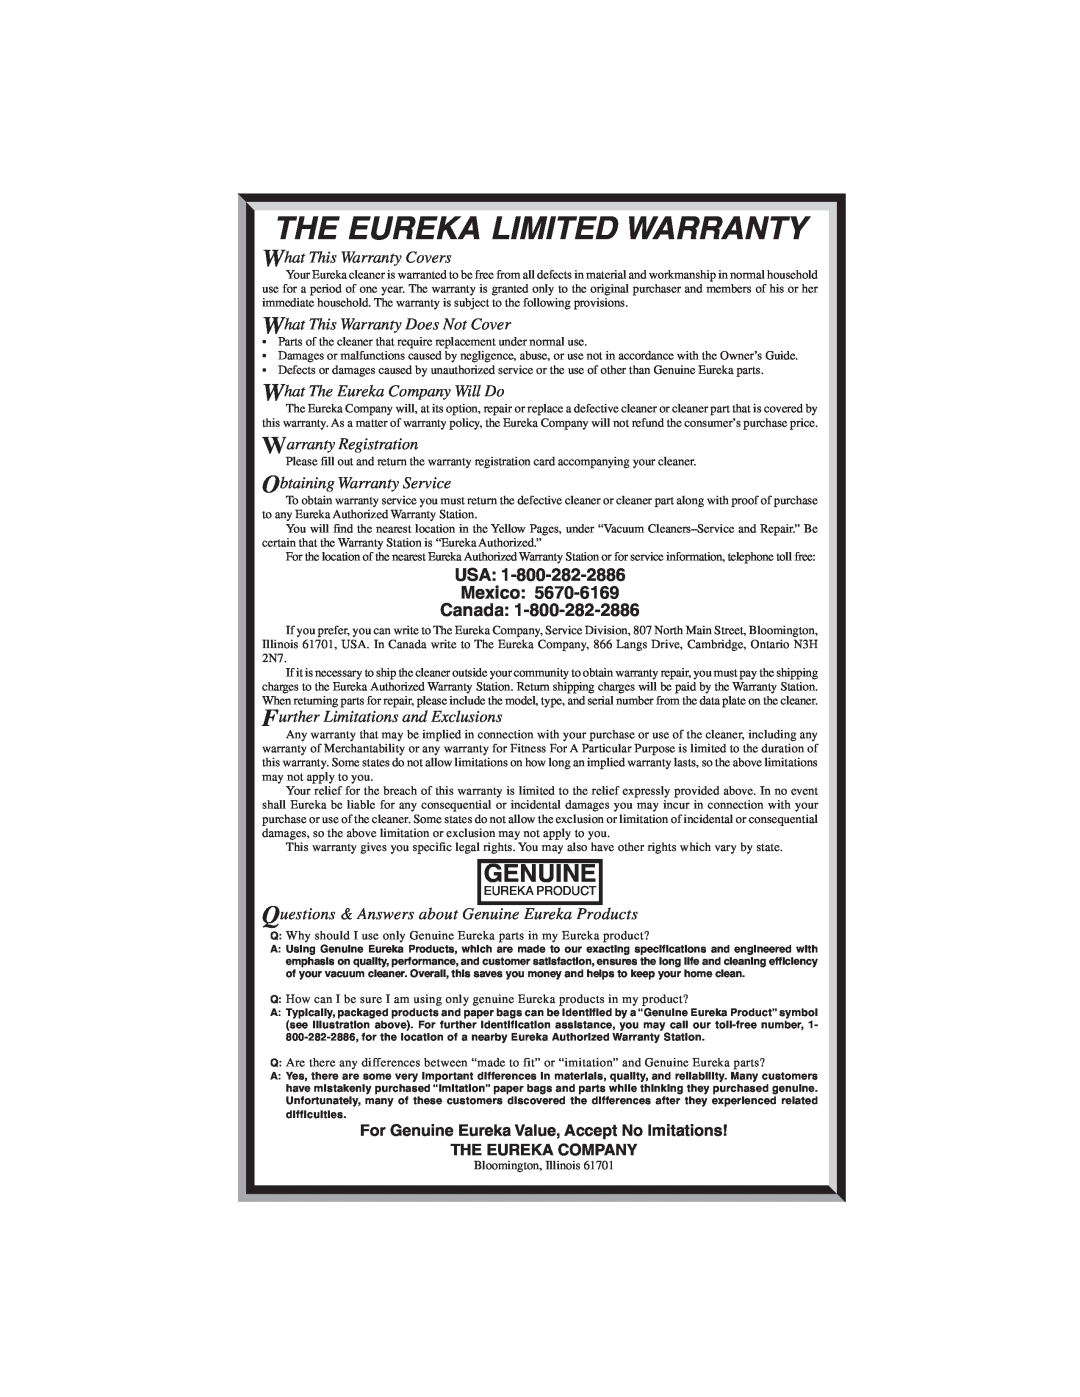 Eureka 400 warranty Genuine, The Eureka Limited Warranty, What This Warranty Covers, What This Warranty Does Not Cover 